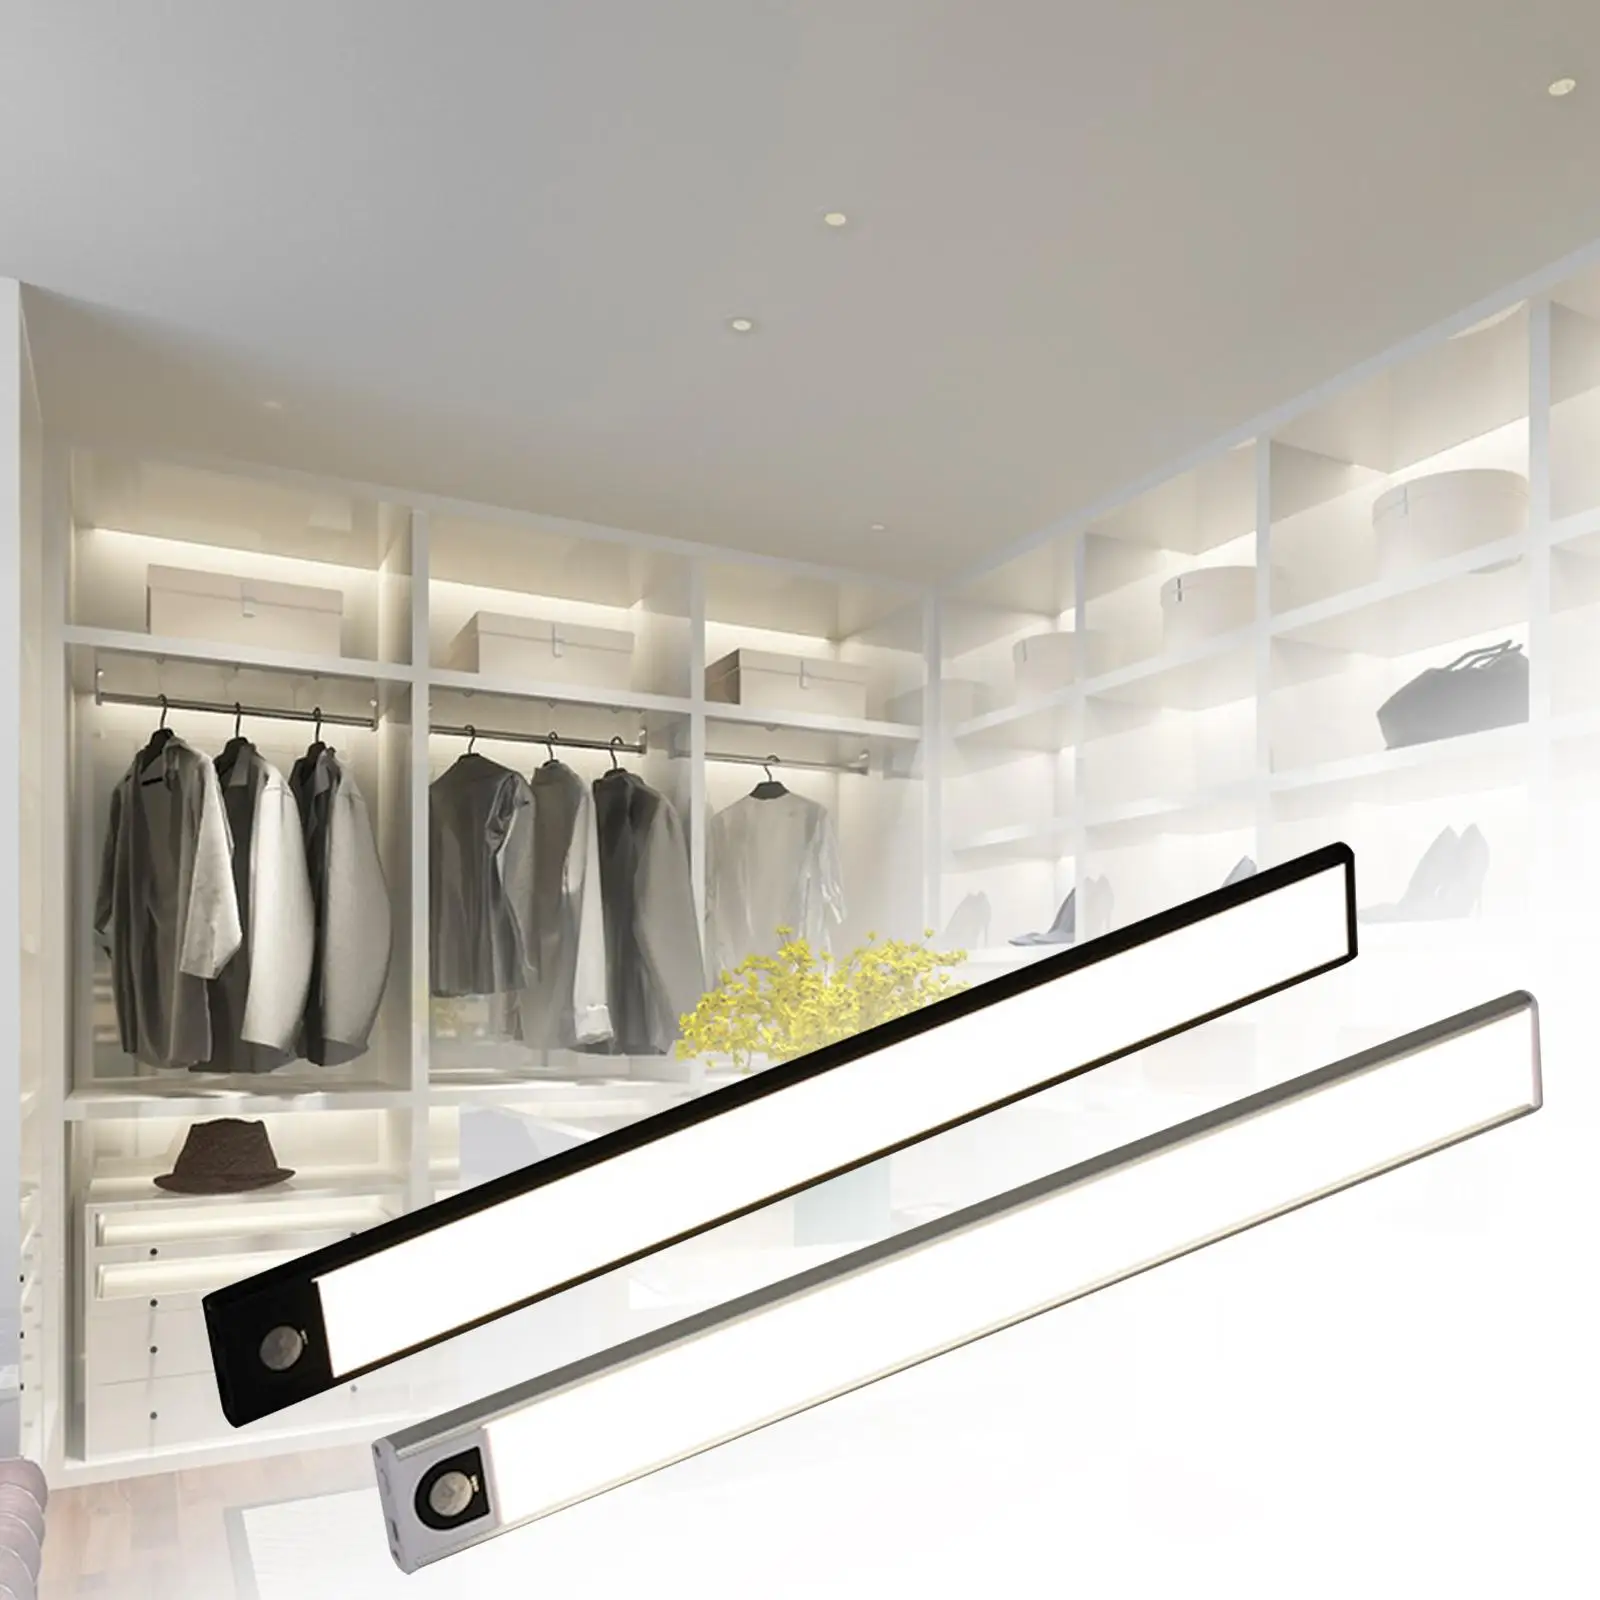 Motion Sensor Light Bar Soft USB Rechargeable LED Night Lighting for Workshops Cabinet